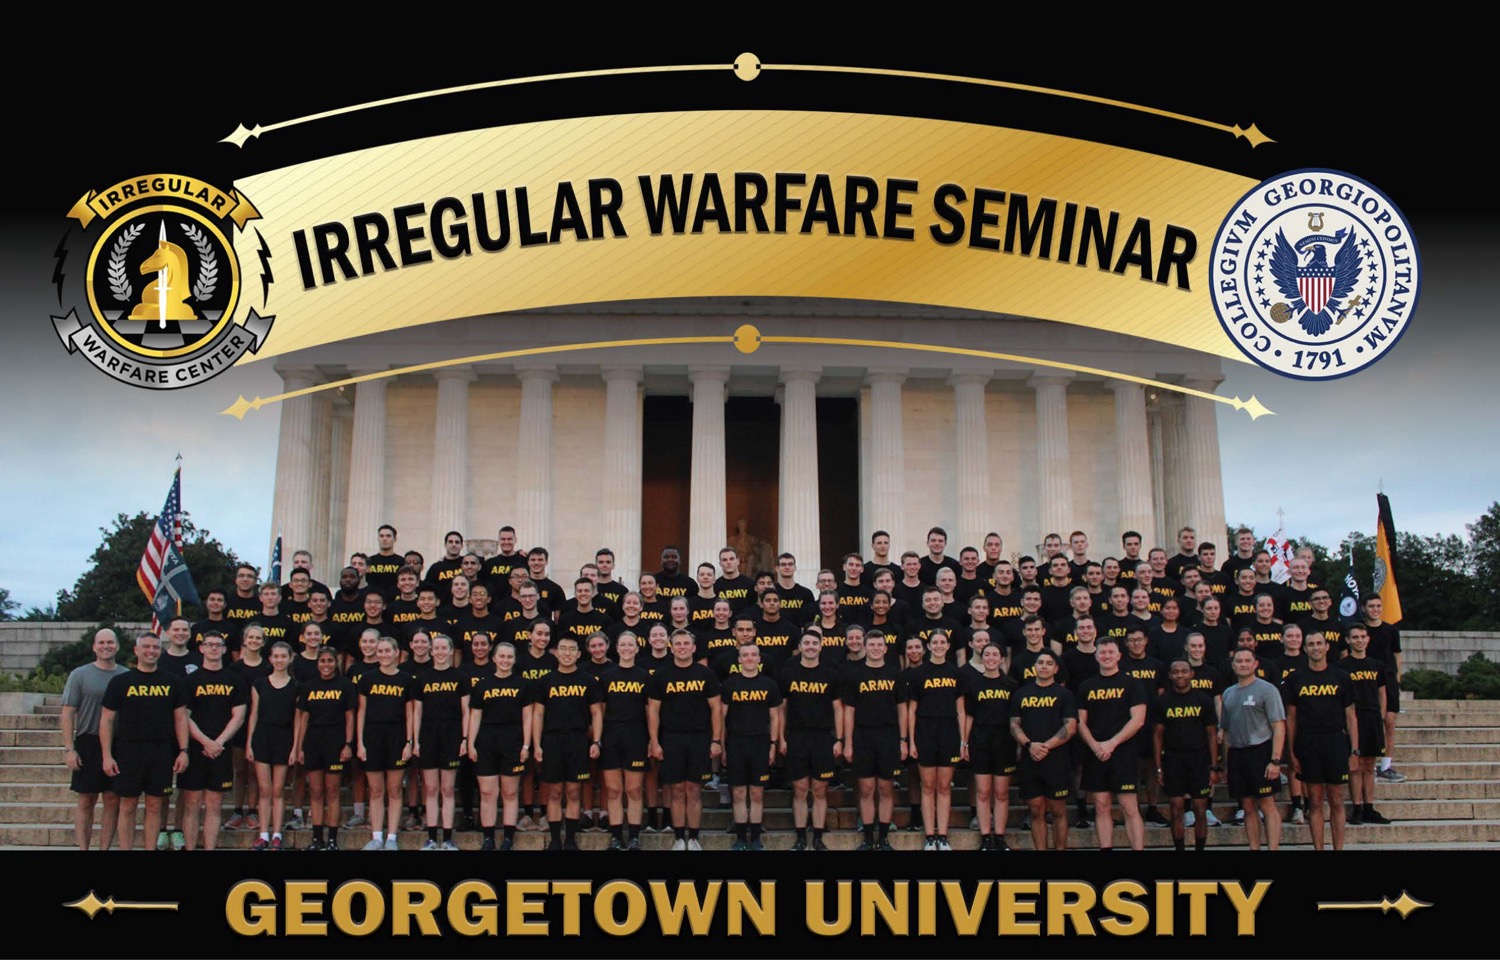 The Irregular Warfare Center (IWC) To Host IW Seminar at Georgetown University